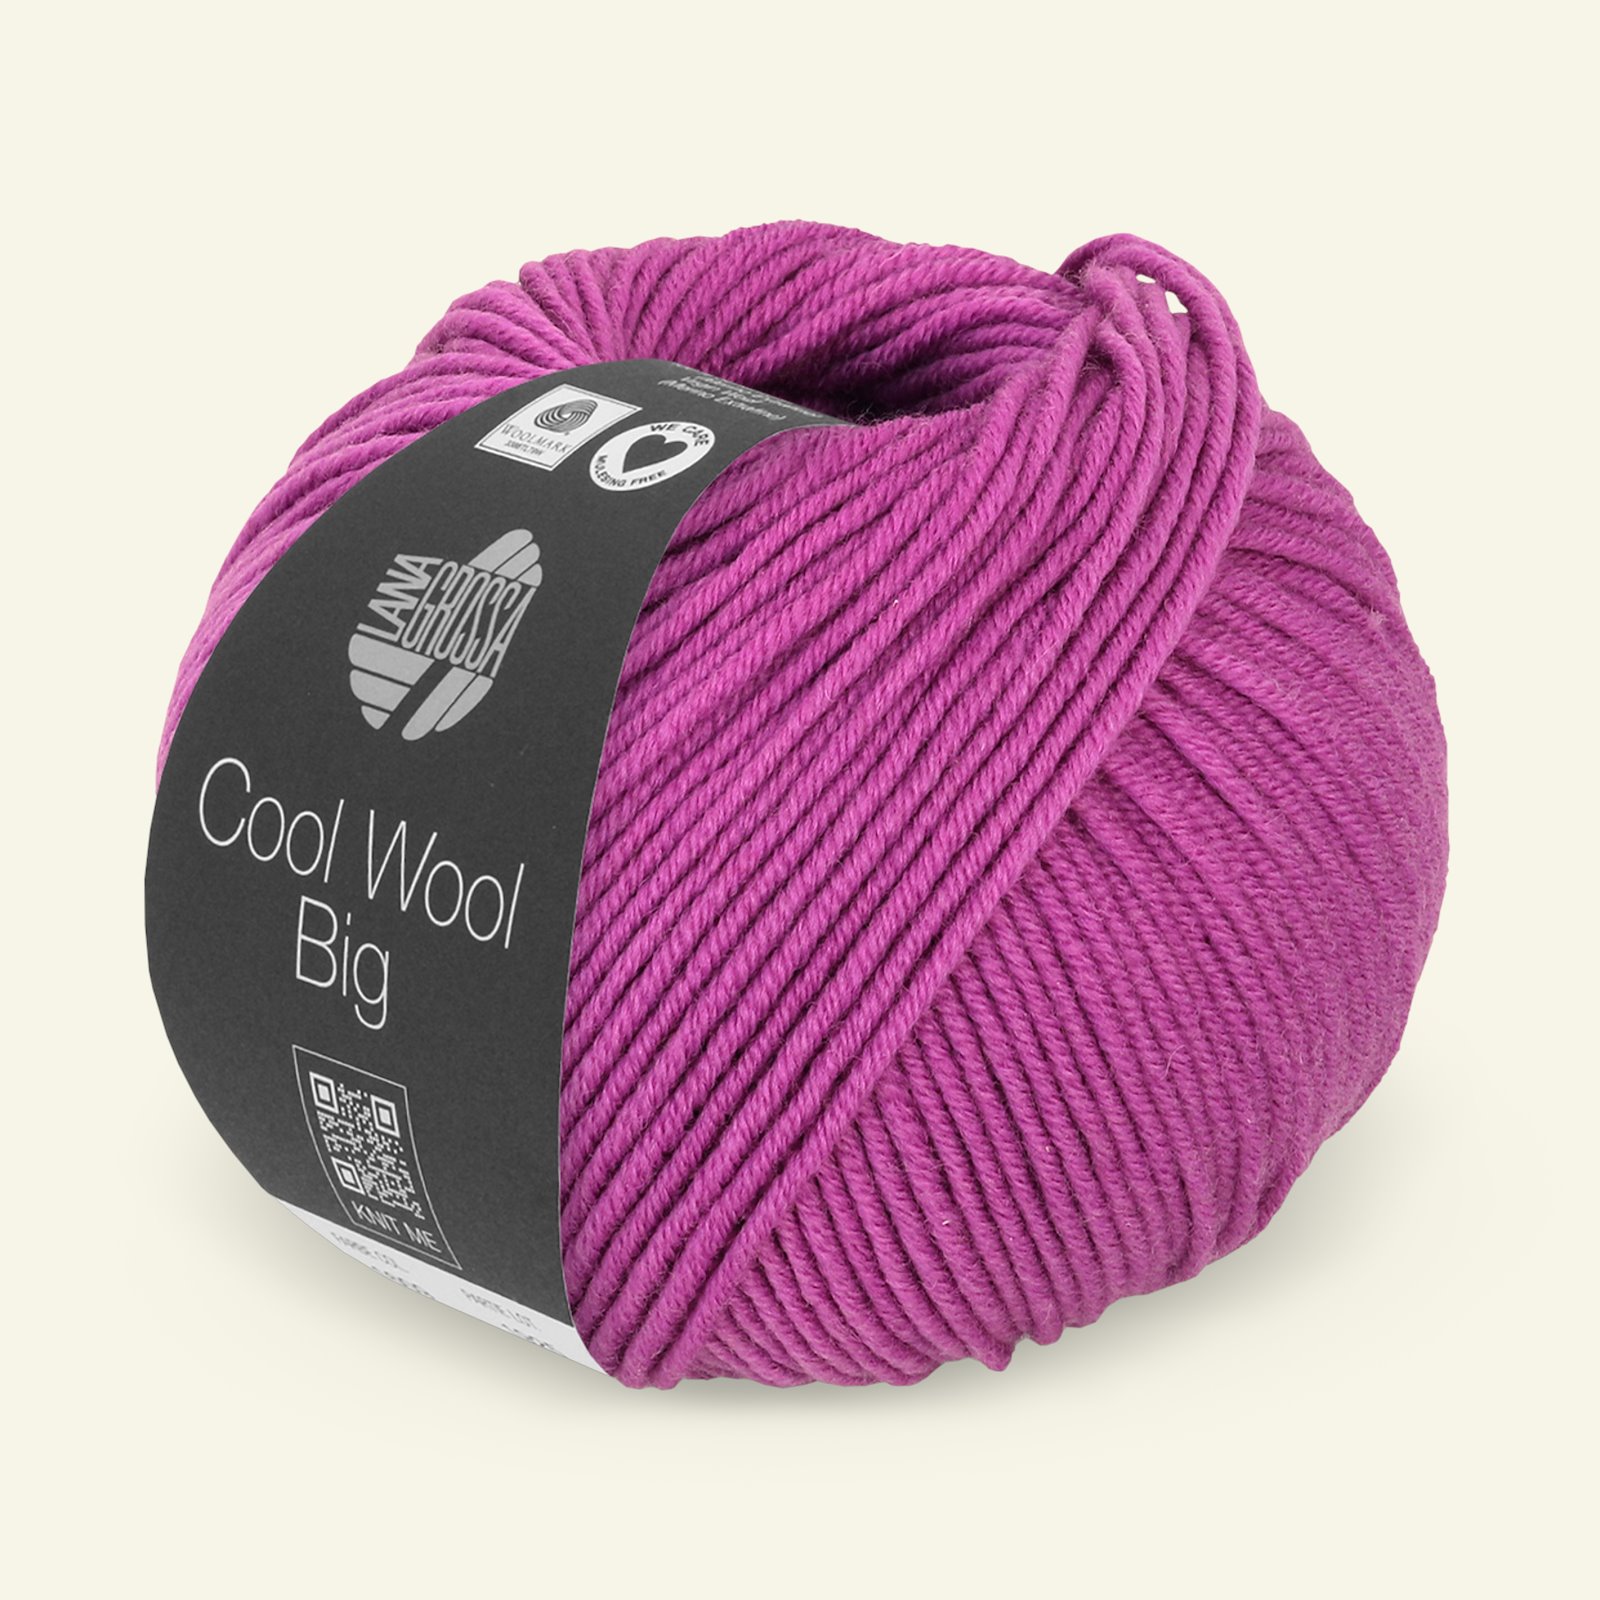 Lana Grossa, extrafine merino wool yarn "Cool Wool Big", fuchsia 90001102_pack